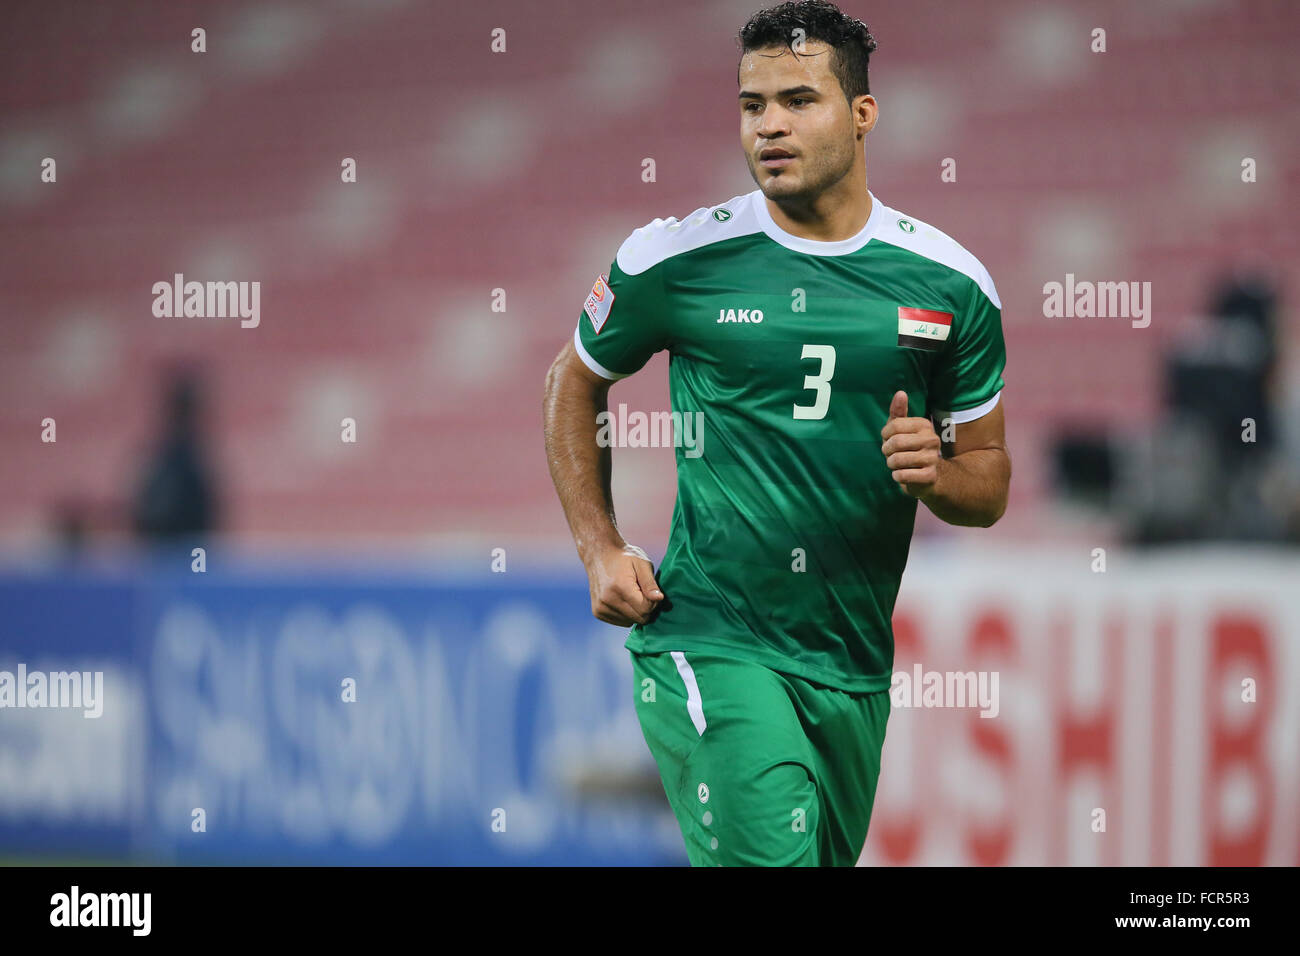 Image result for Hamza Adnan iraq football player